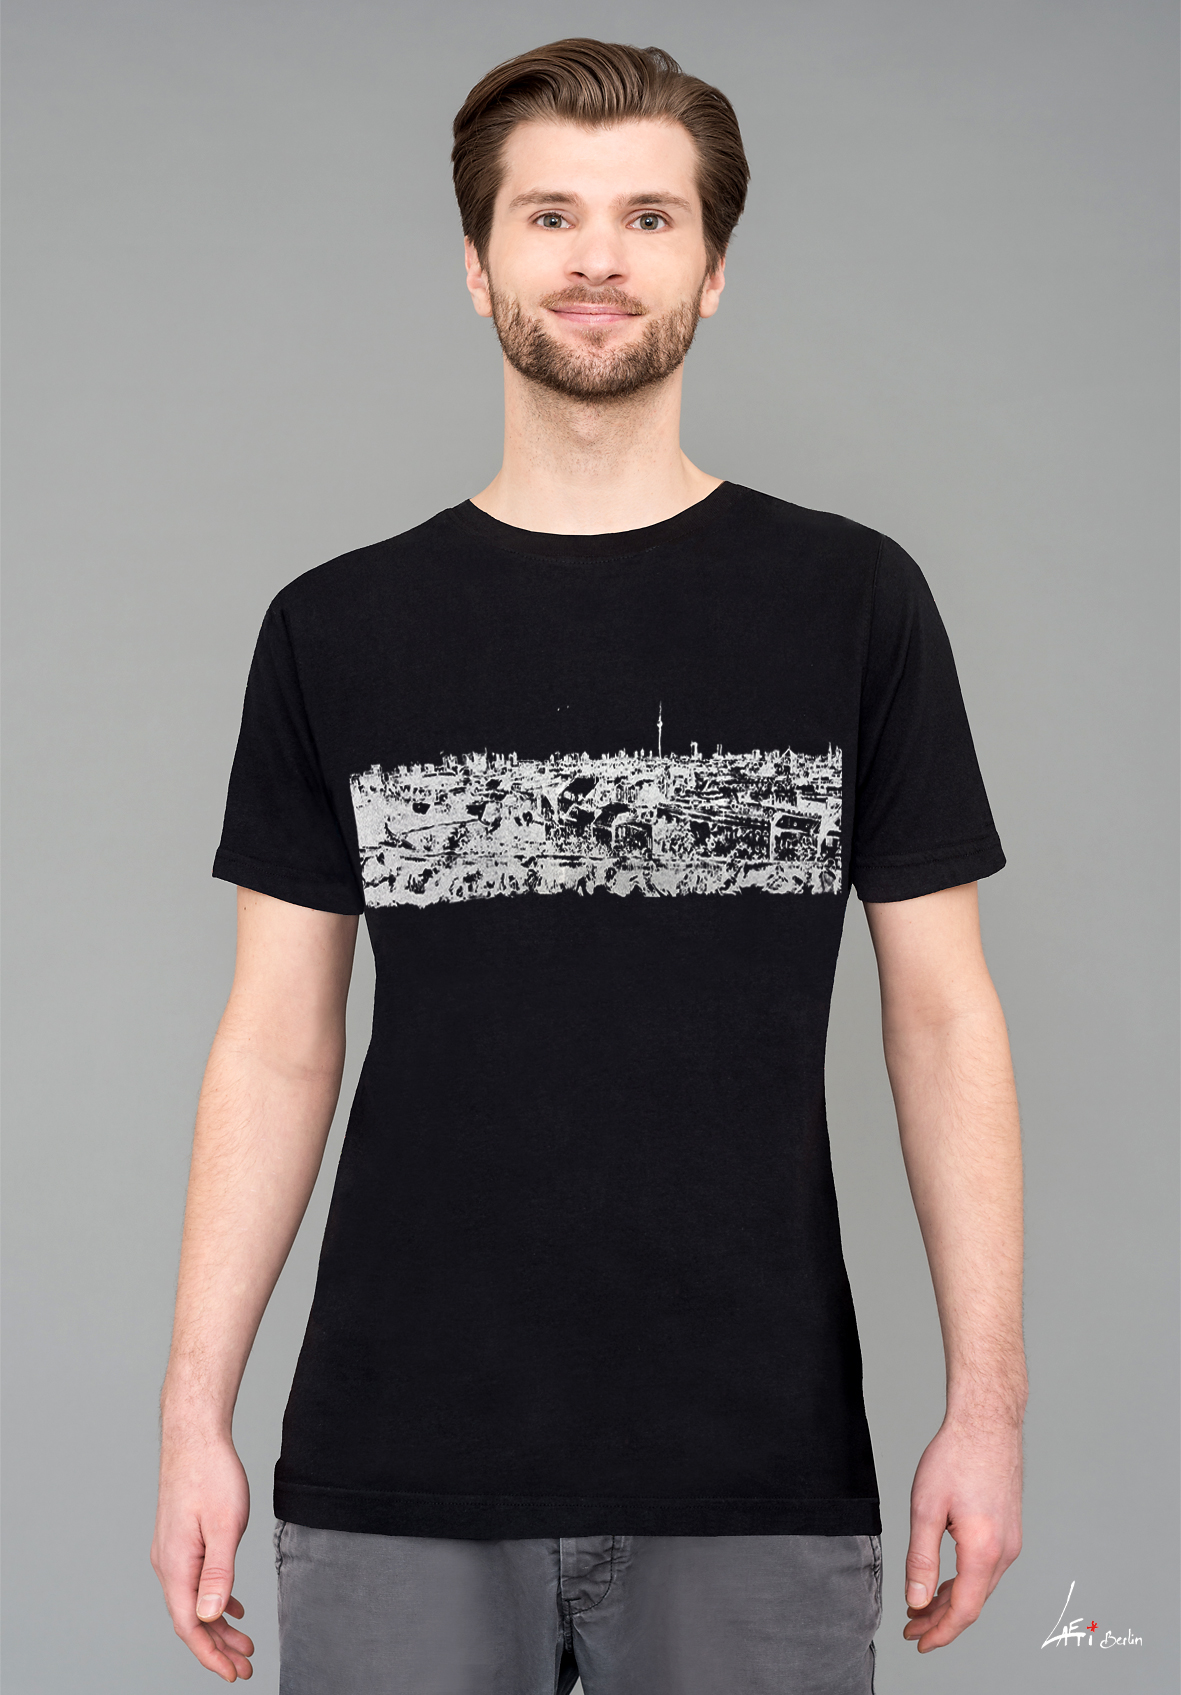 T-shirt Panorama Berlin - Klunkerkranich Black White print Man